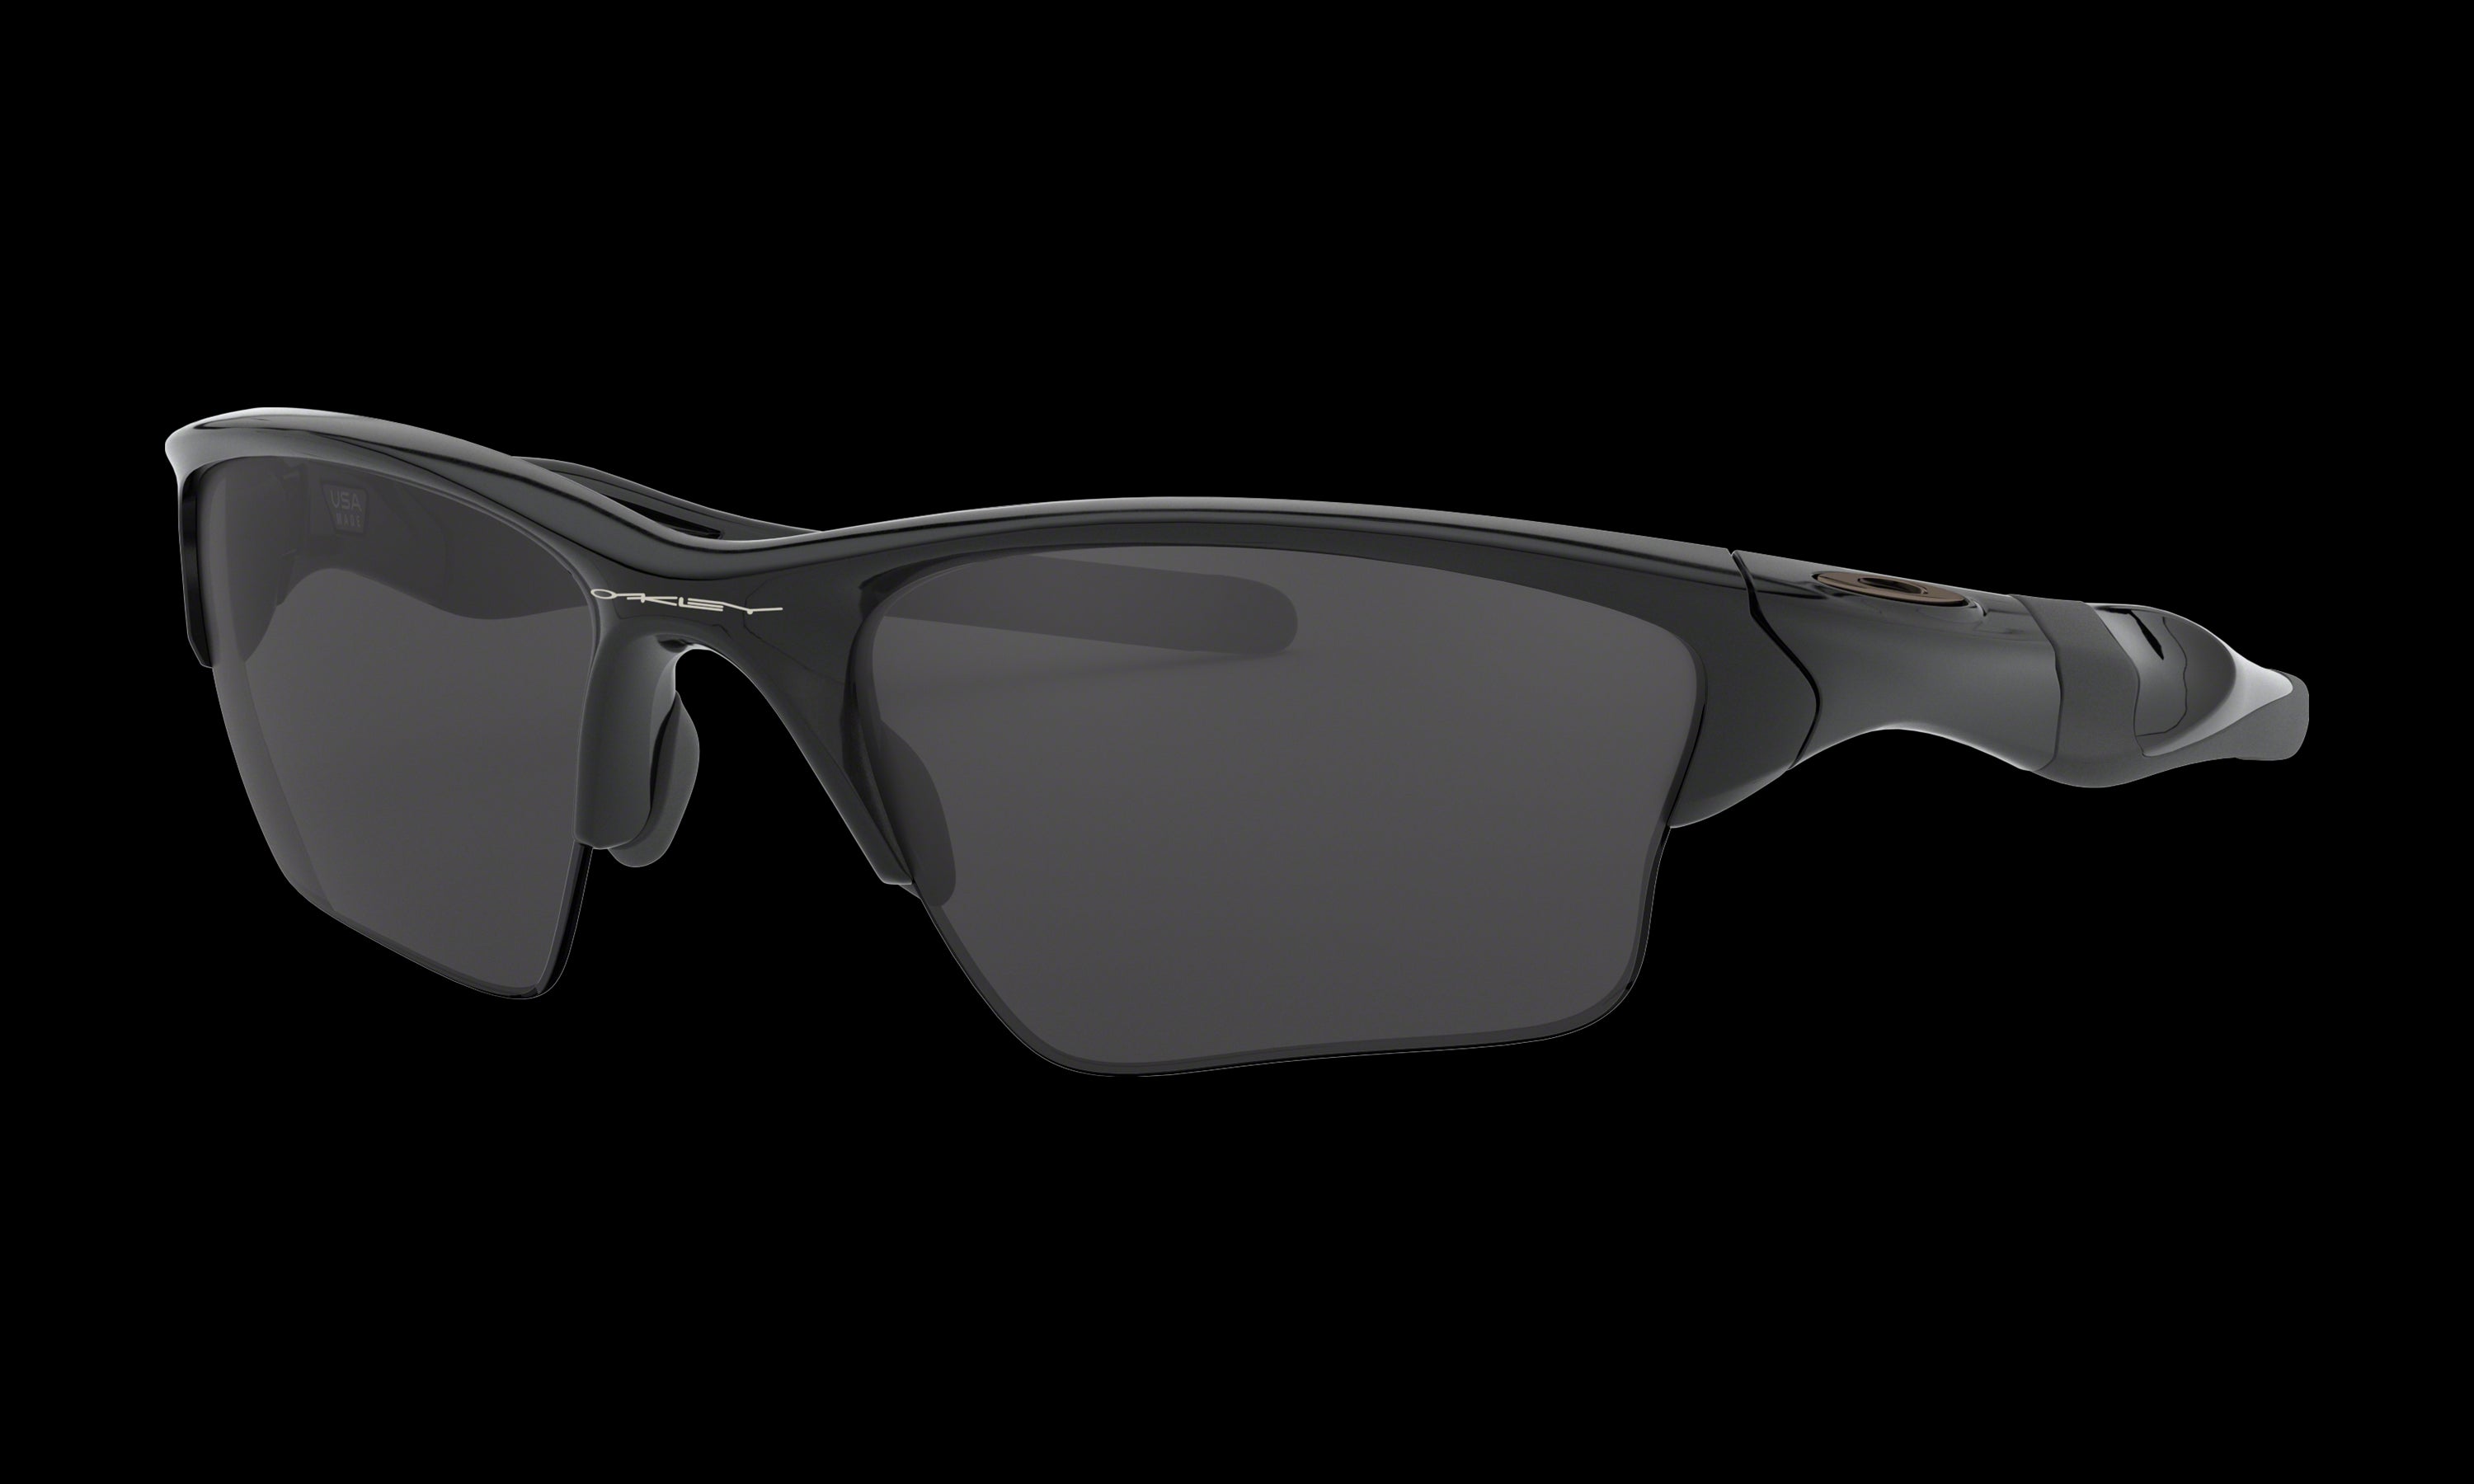 Men's Oakley Half Jacket 2.0 XL Sunglasses in Polished Black Black Iridium